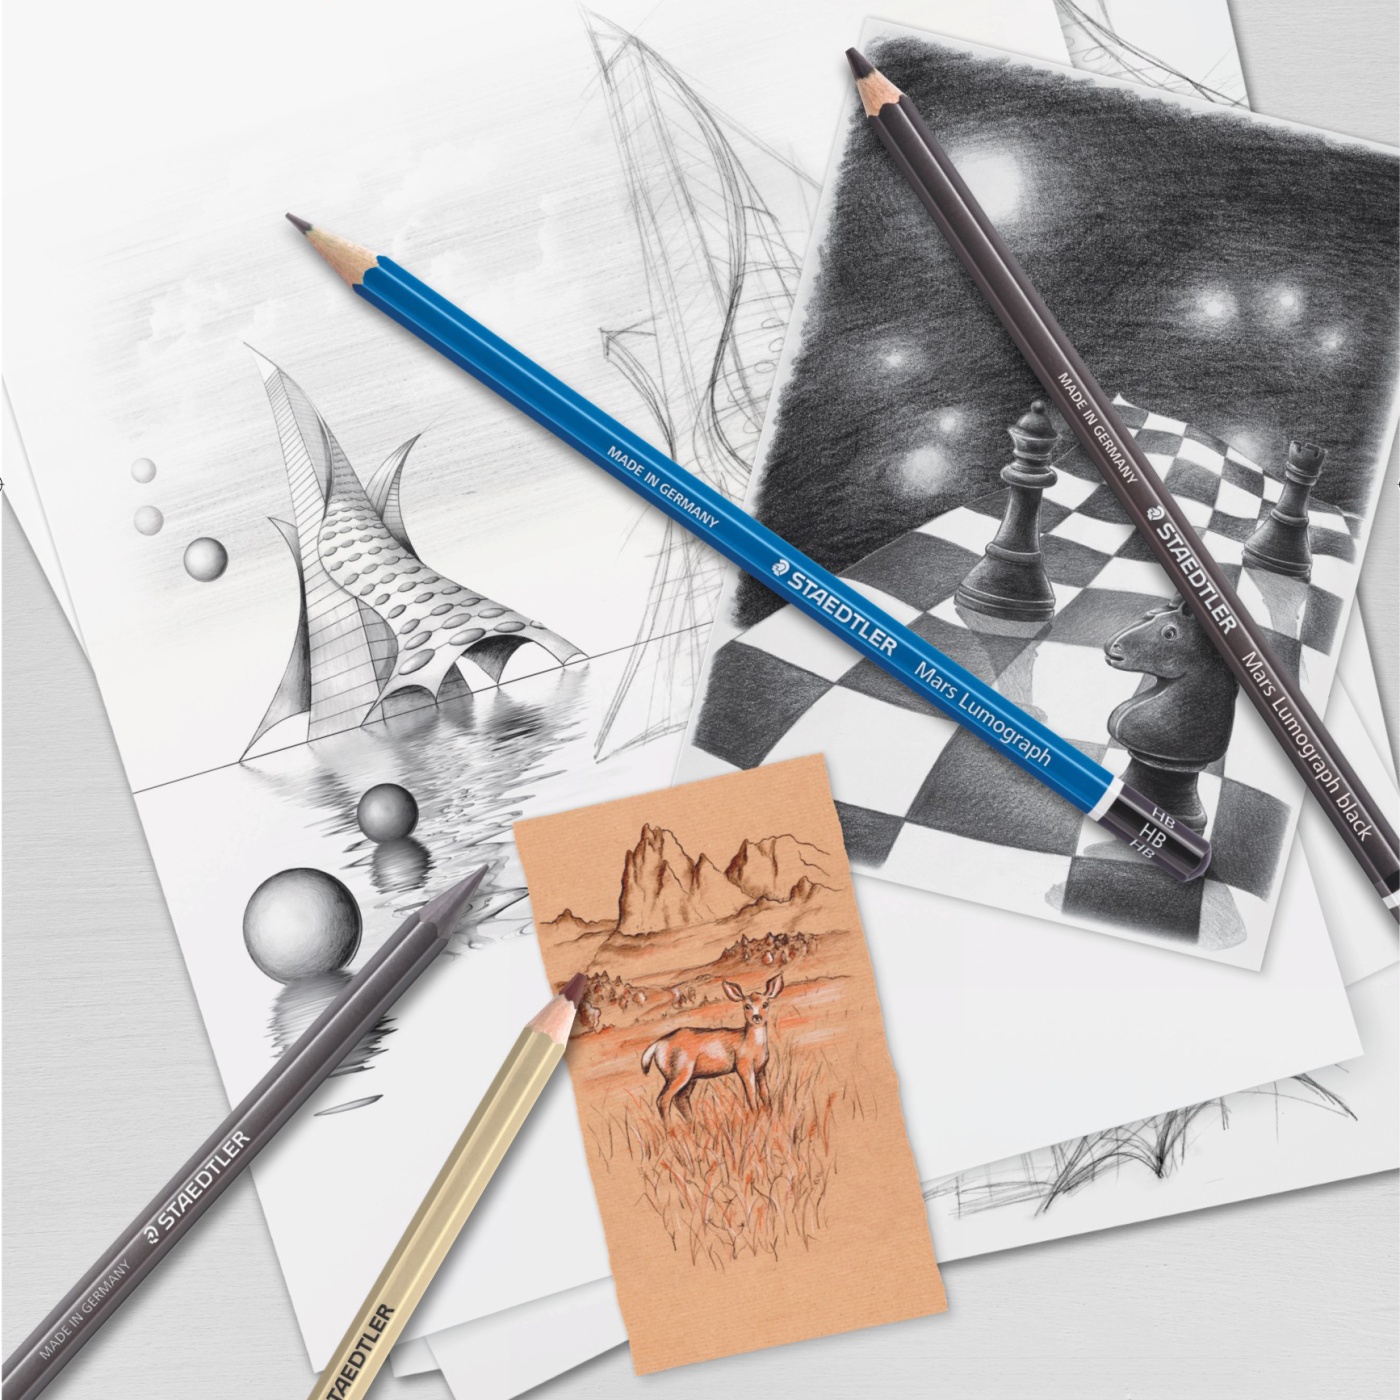 Mars Lumograph Aqua 5-pack in the group Pens / Artist Pens / Watercolor Pencils at Pen Store (111230)